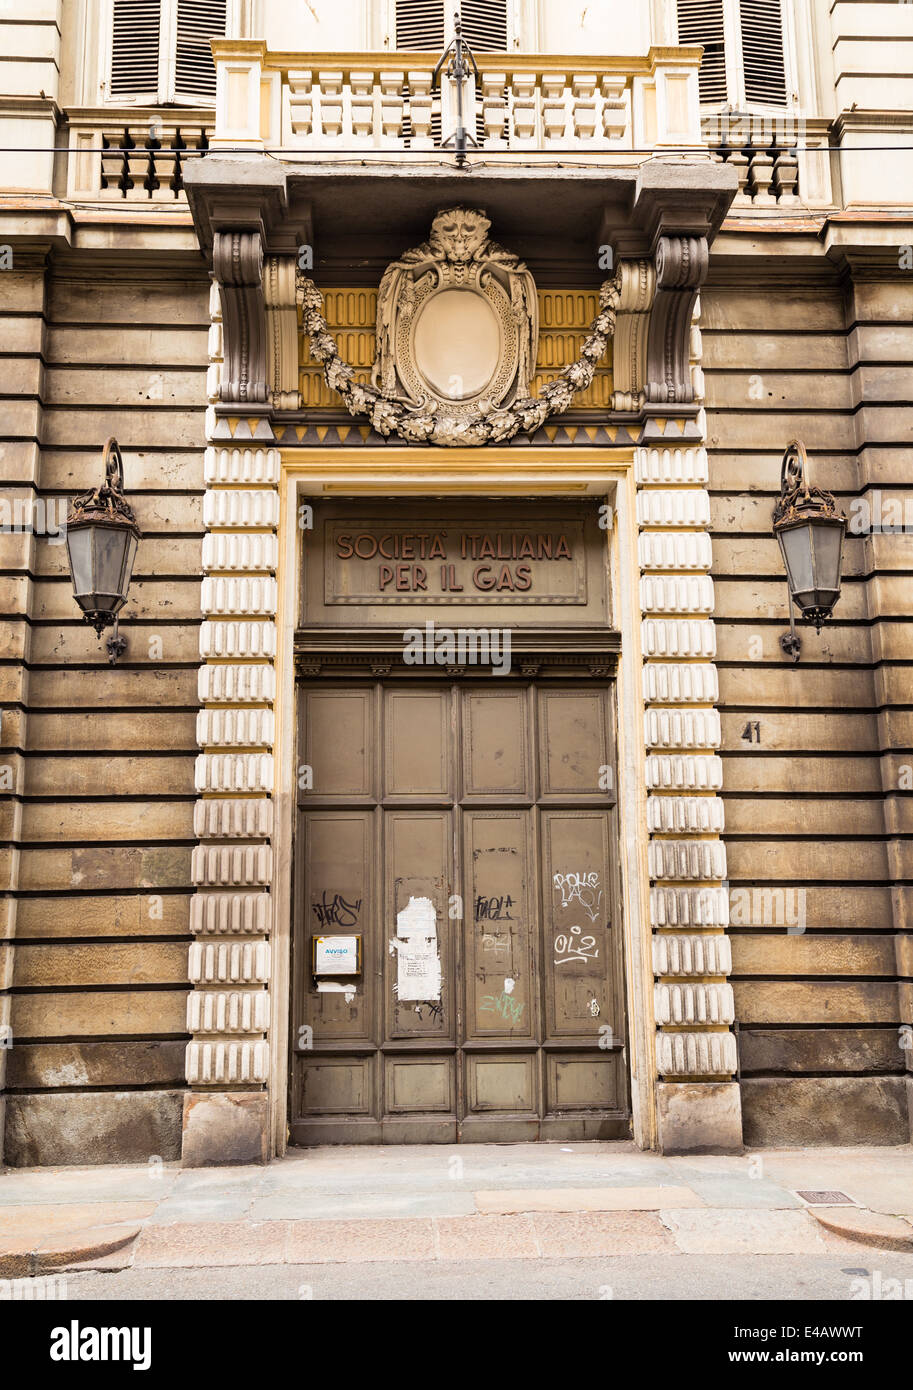 Dekorative Türöffnung, Turin, Italien mit Schriftzug 'Societa Italiana per il Gas' Stockfoto